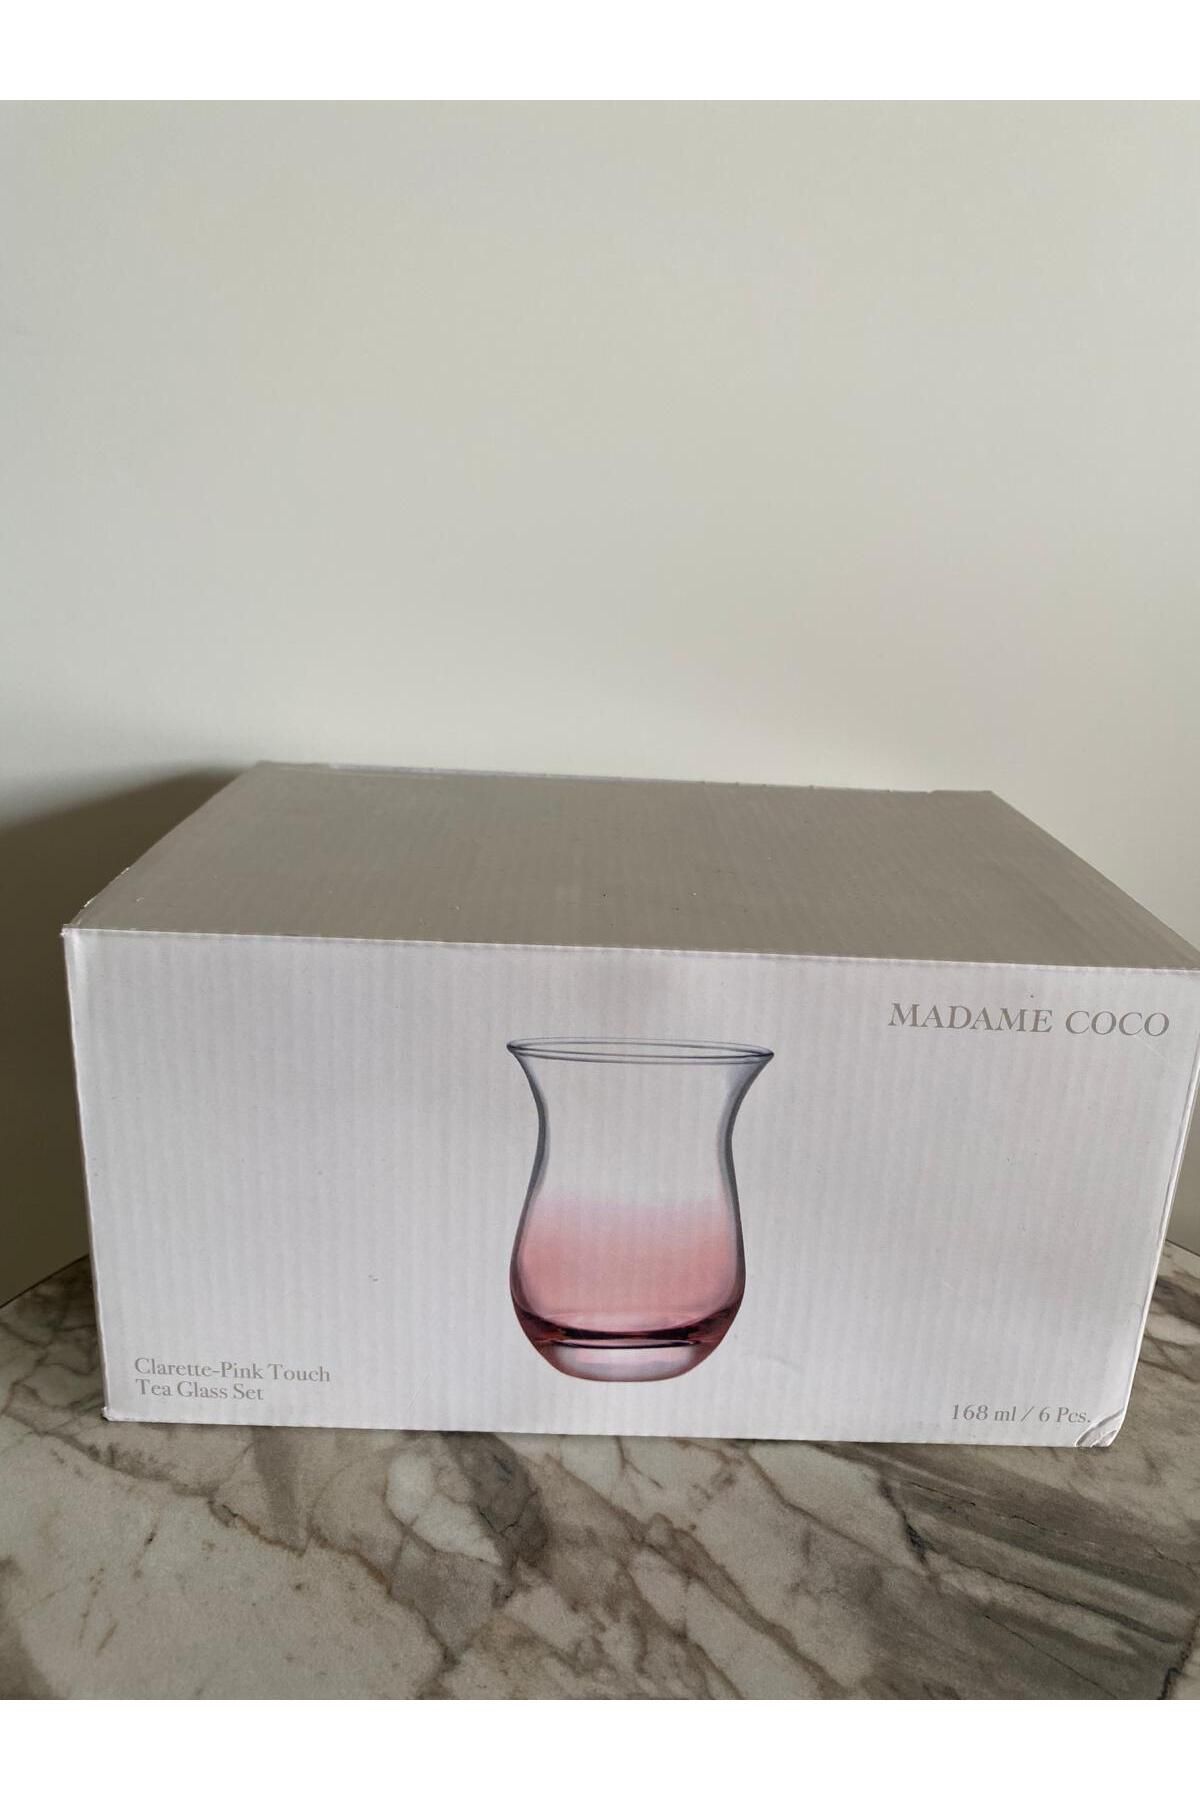 Madame Coco Clarette Pink Touch 6'lı Çay Bardağı - 168 ml